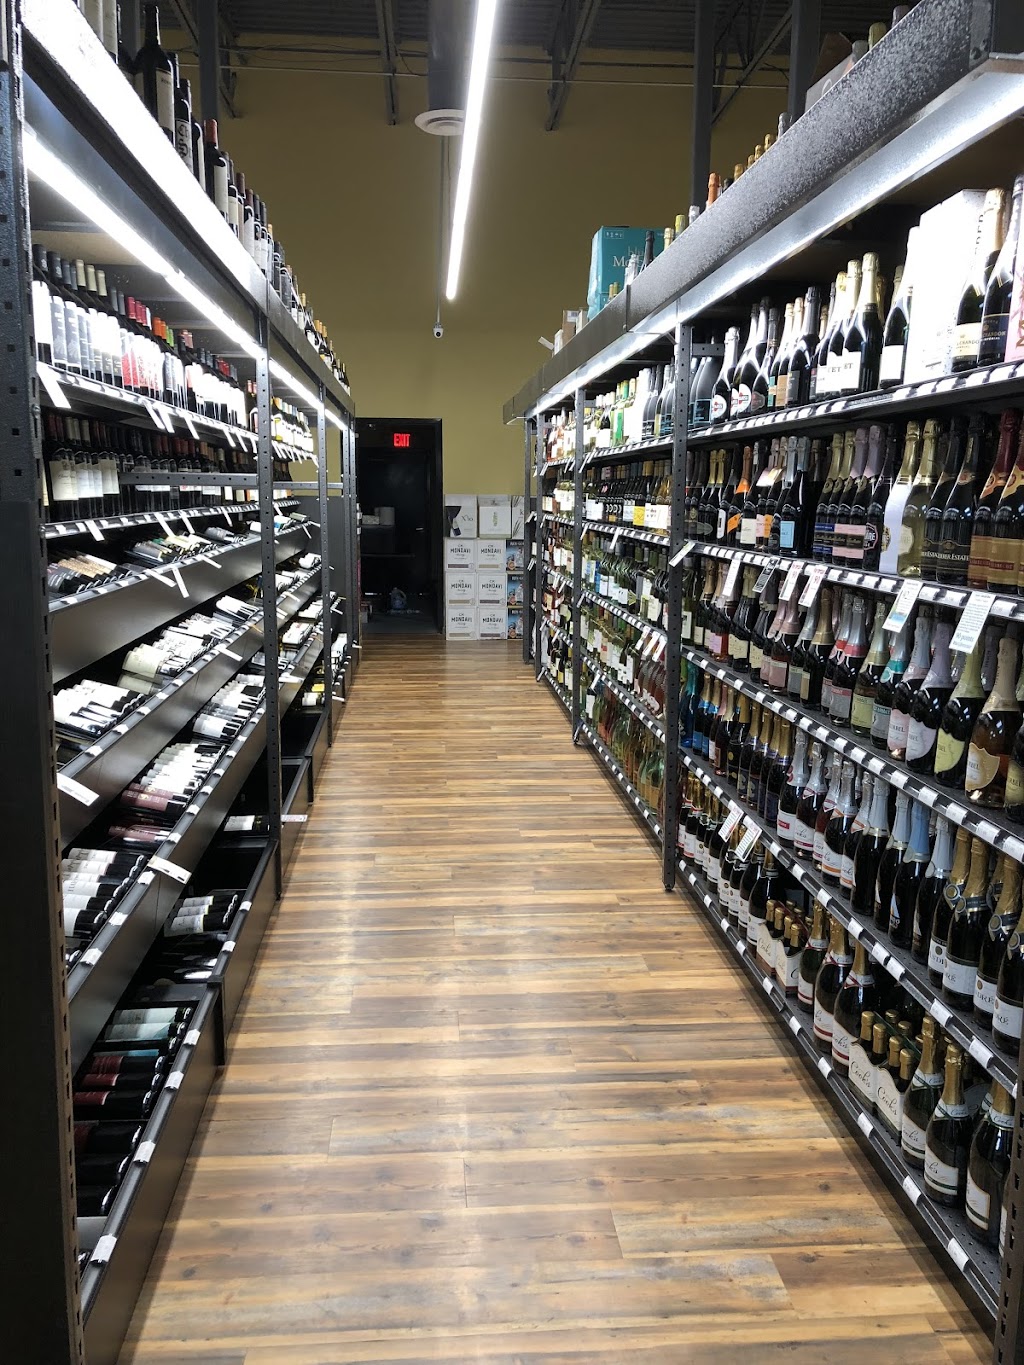 Bottle Stop Wine & Spirits | 56 Crescent Blvd, Gloucester City, NJ 08030 | Phone: (856) 349-2405